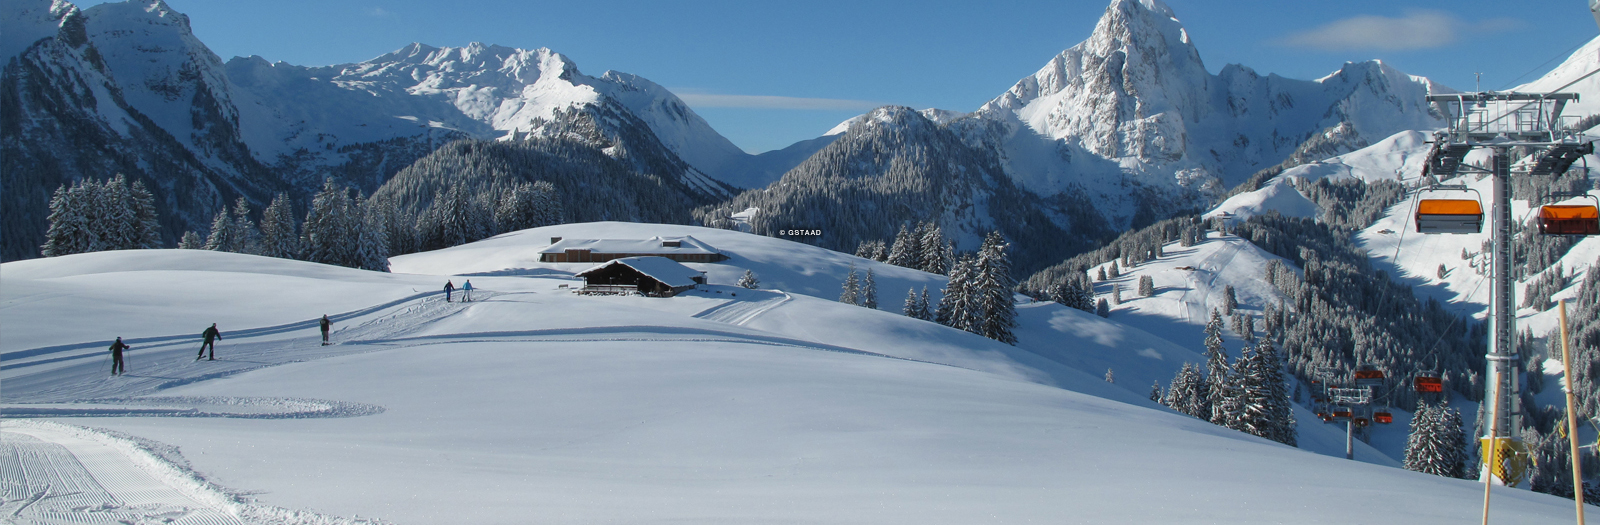 gstaad intermediate skiing